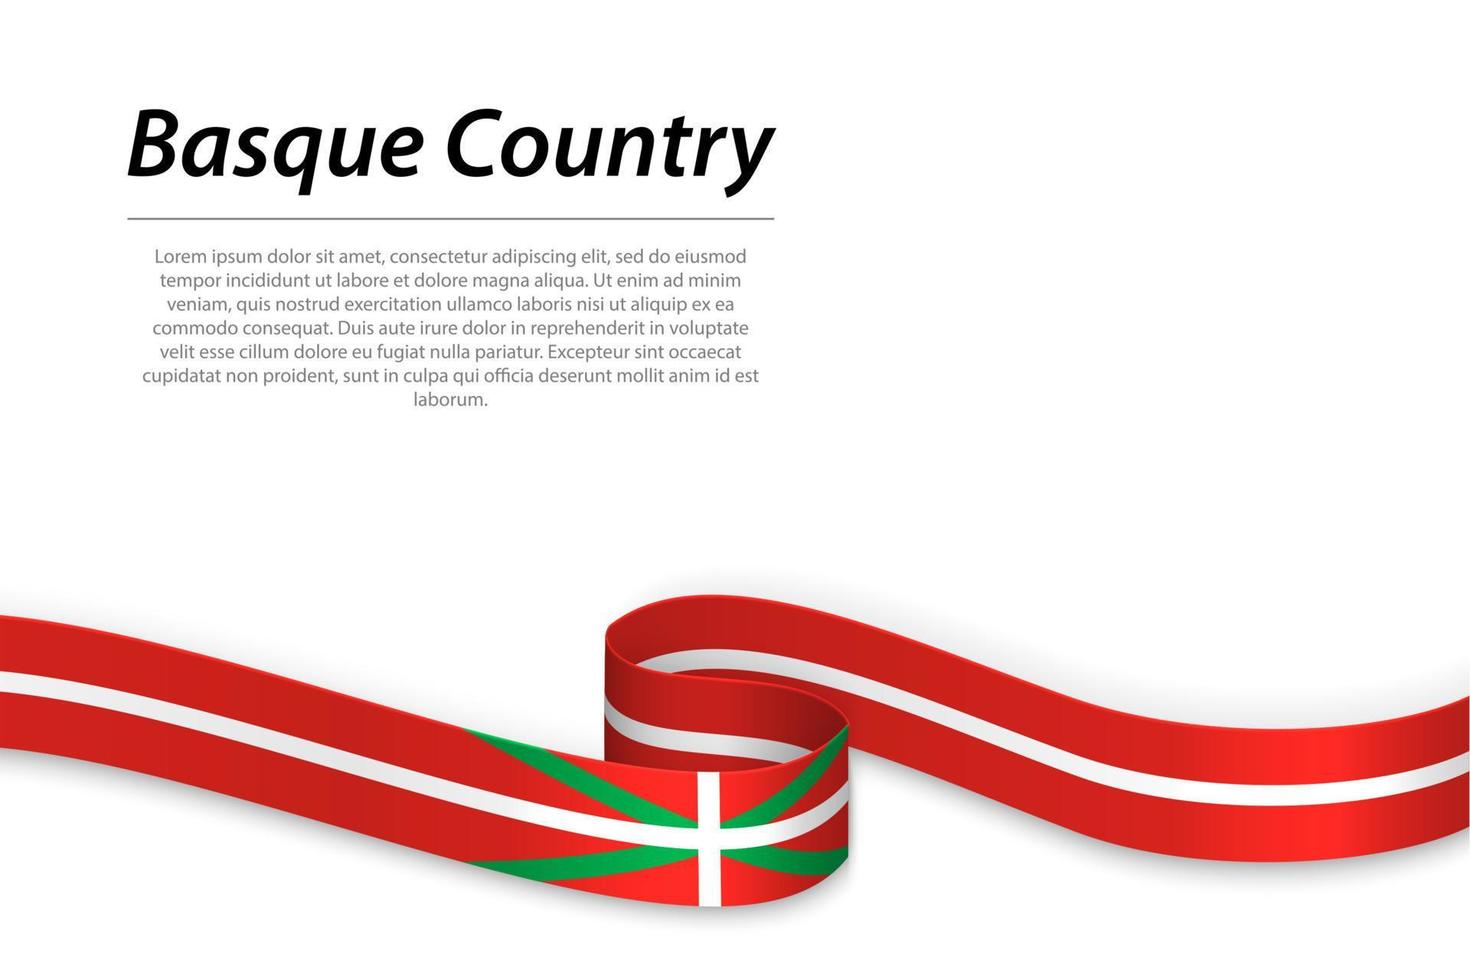 acenando fita ou bandeira com bandeira do basco país vetor